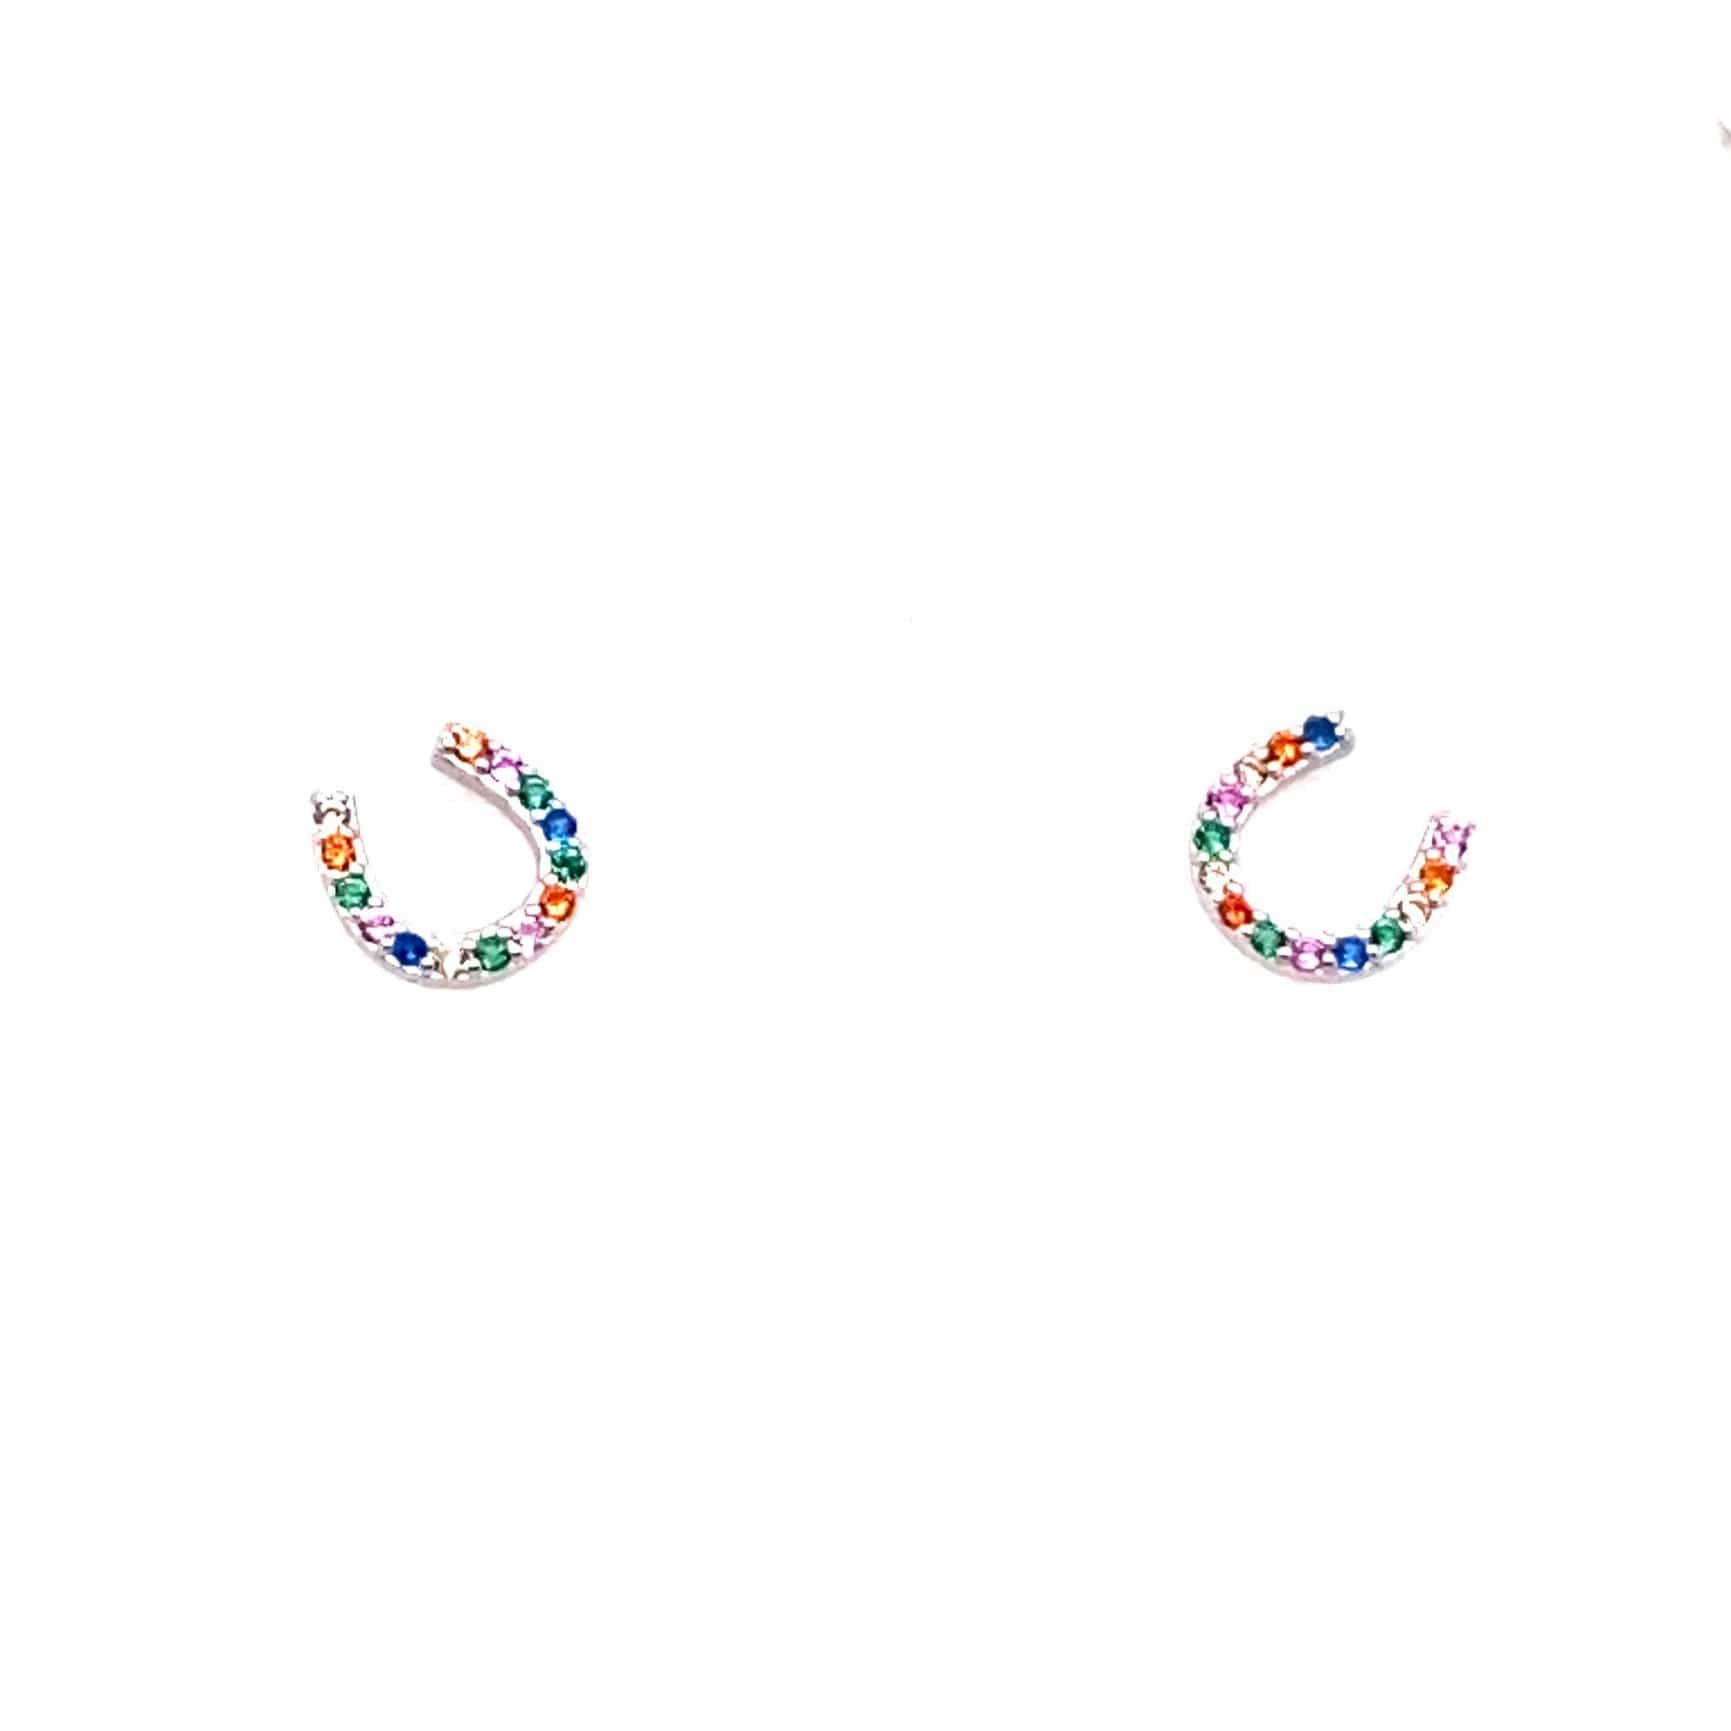 PEGASUS JEWELLERY Earrings Rainbow Horseshoe Earrings